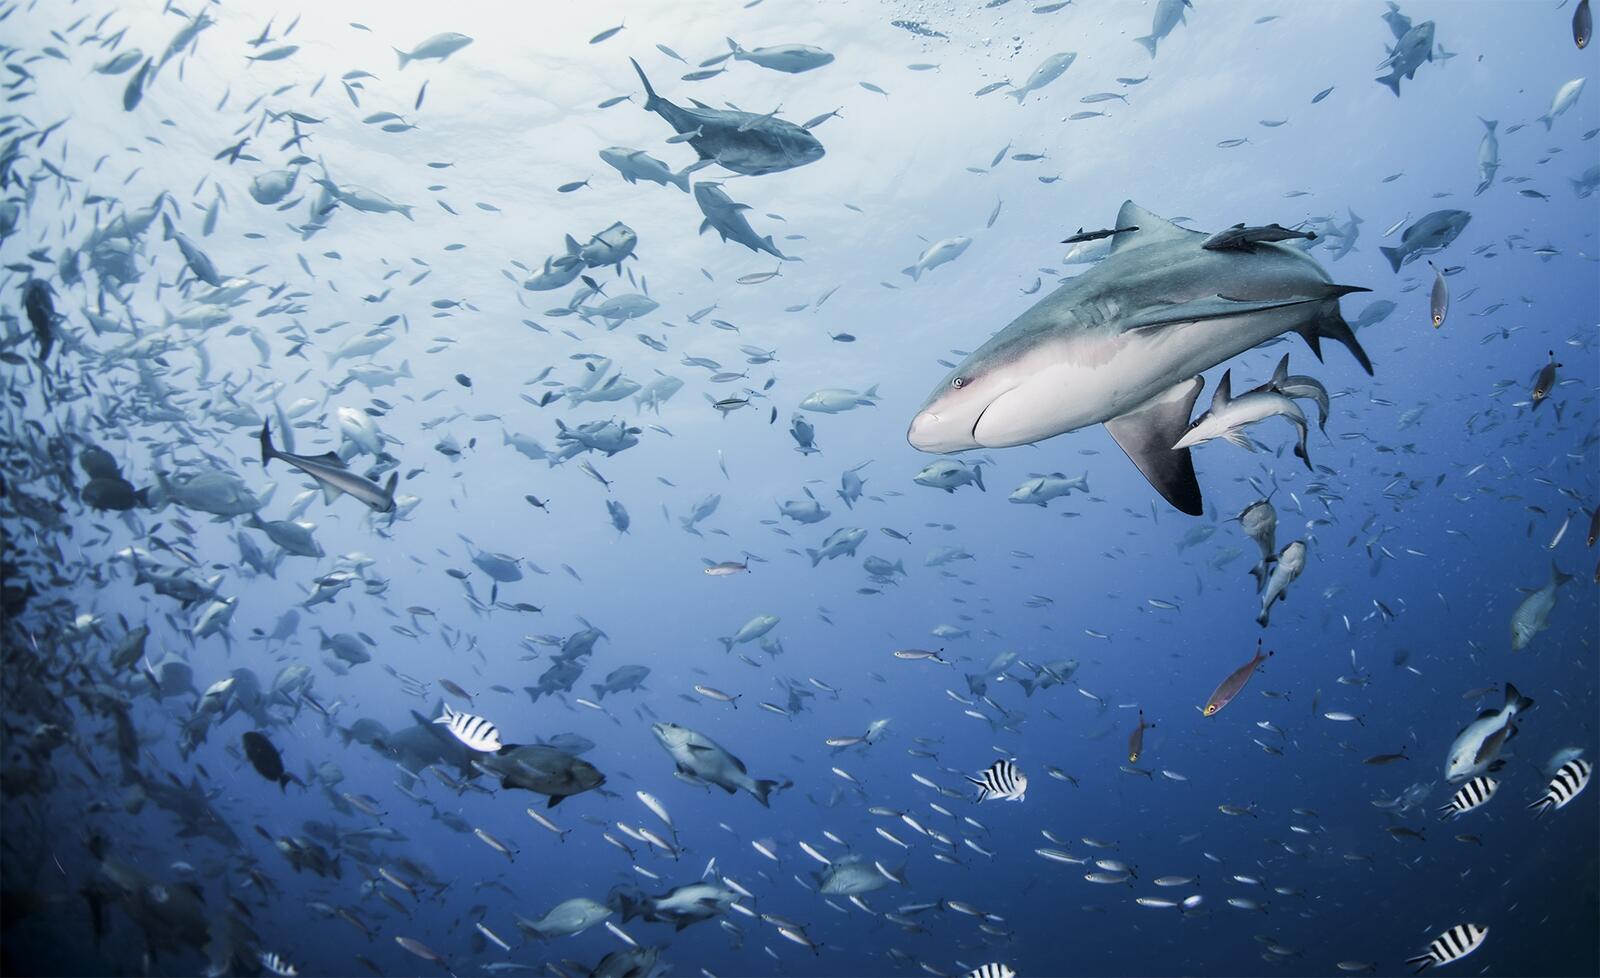 Wallpapers underwater world fish shark on the desktop